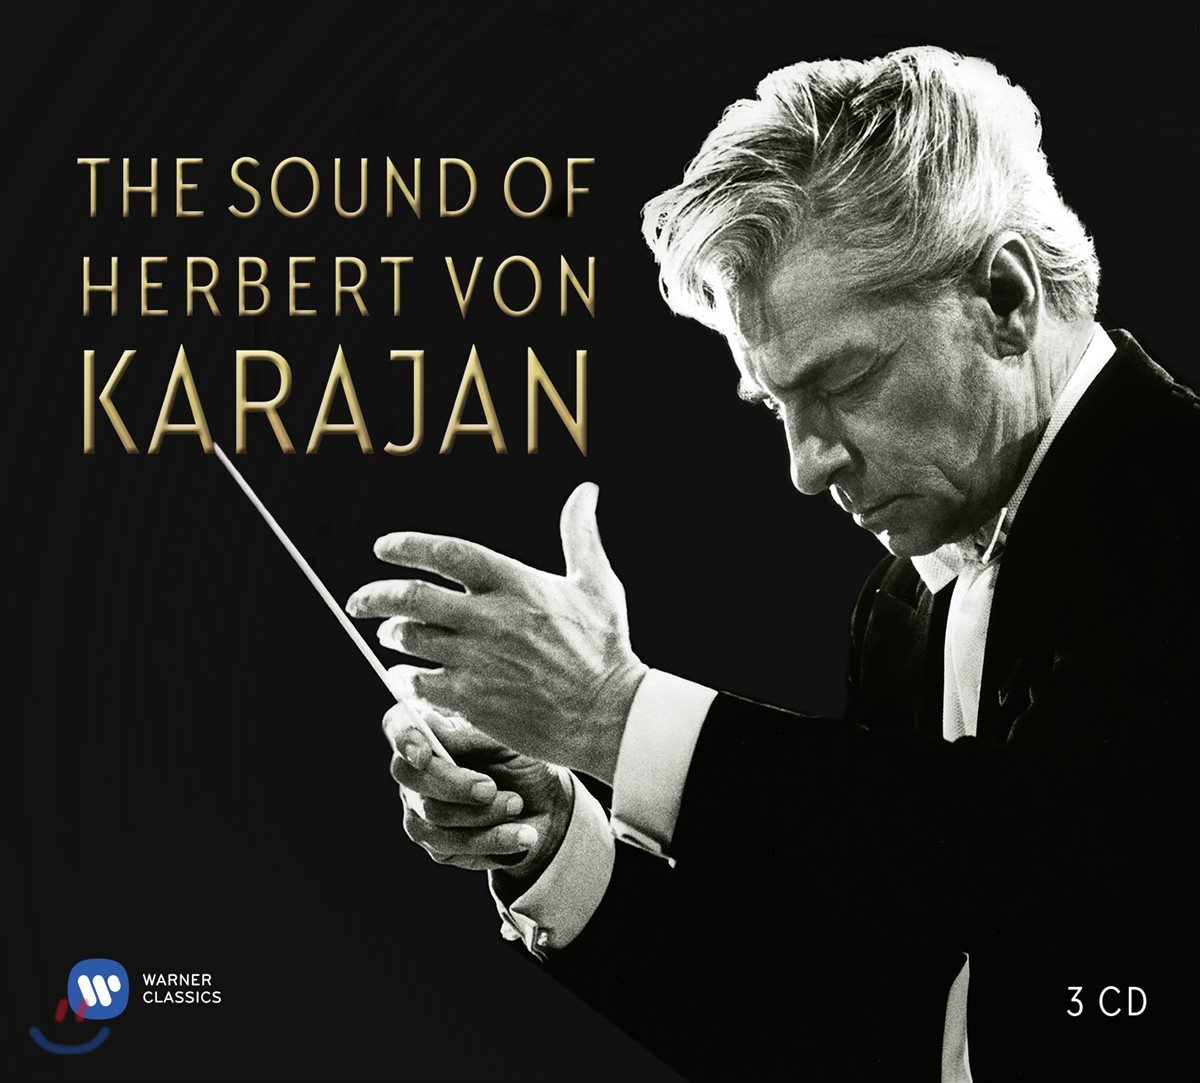 Herbert von Karajan 카라얀 사운드 - 드보르작: 교향곡 8번, 9번 / 라벨: 볼레로 / 드뷔시: 바다 / 차이코프스키 & 라흐마니노프: 피아노 협주곡